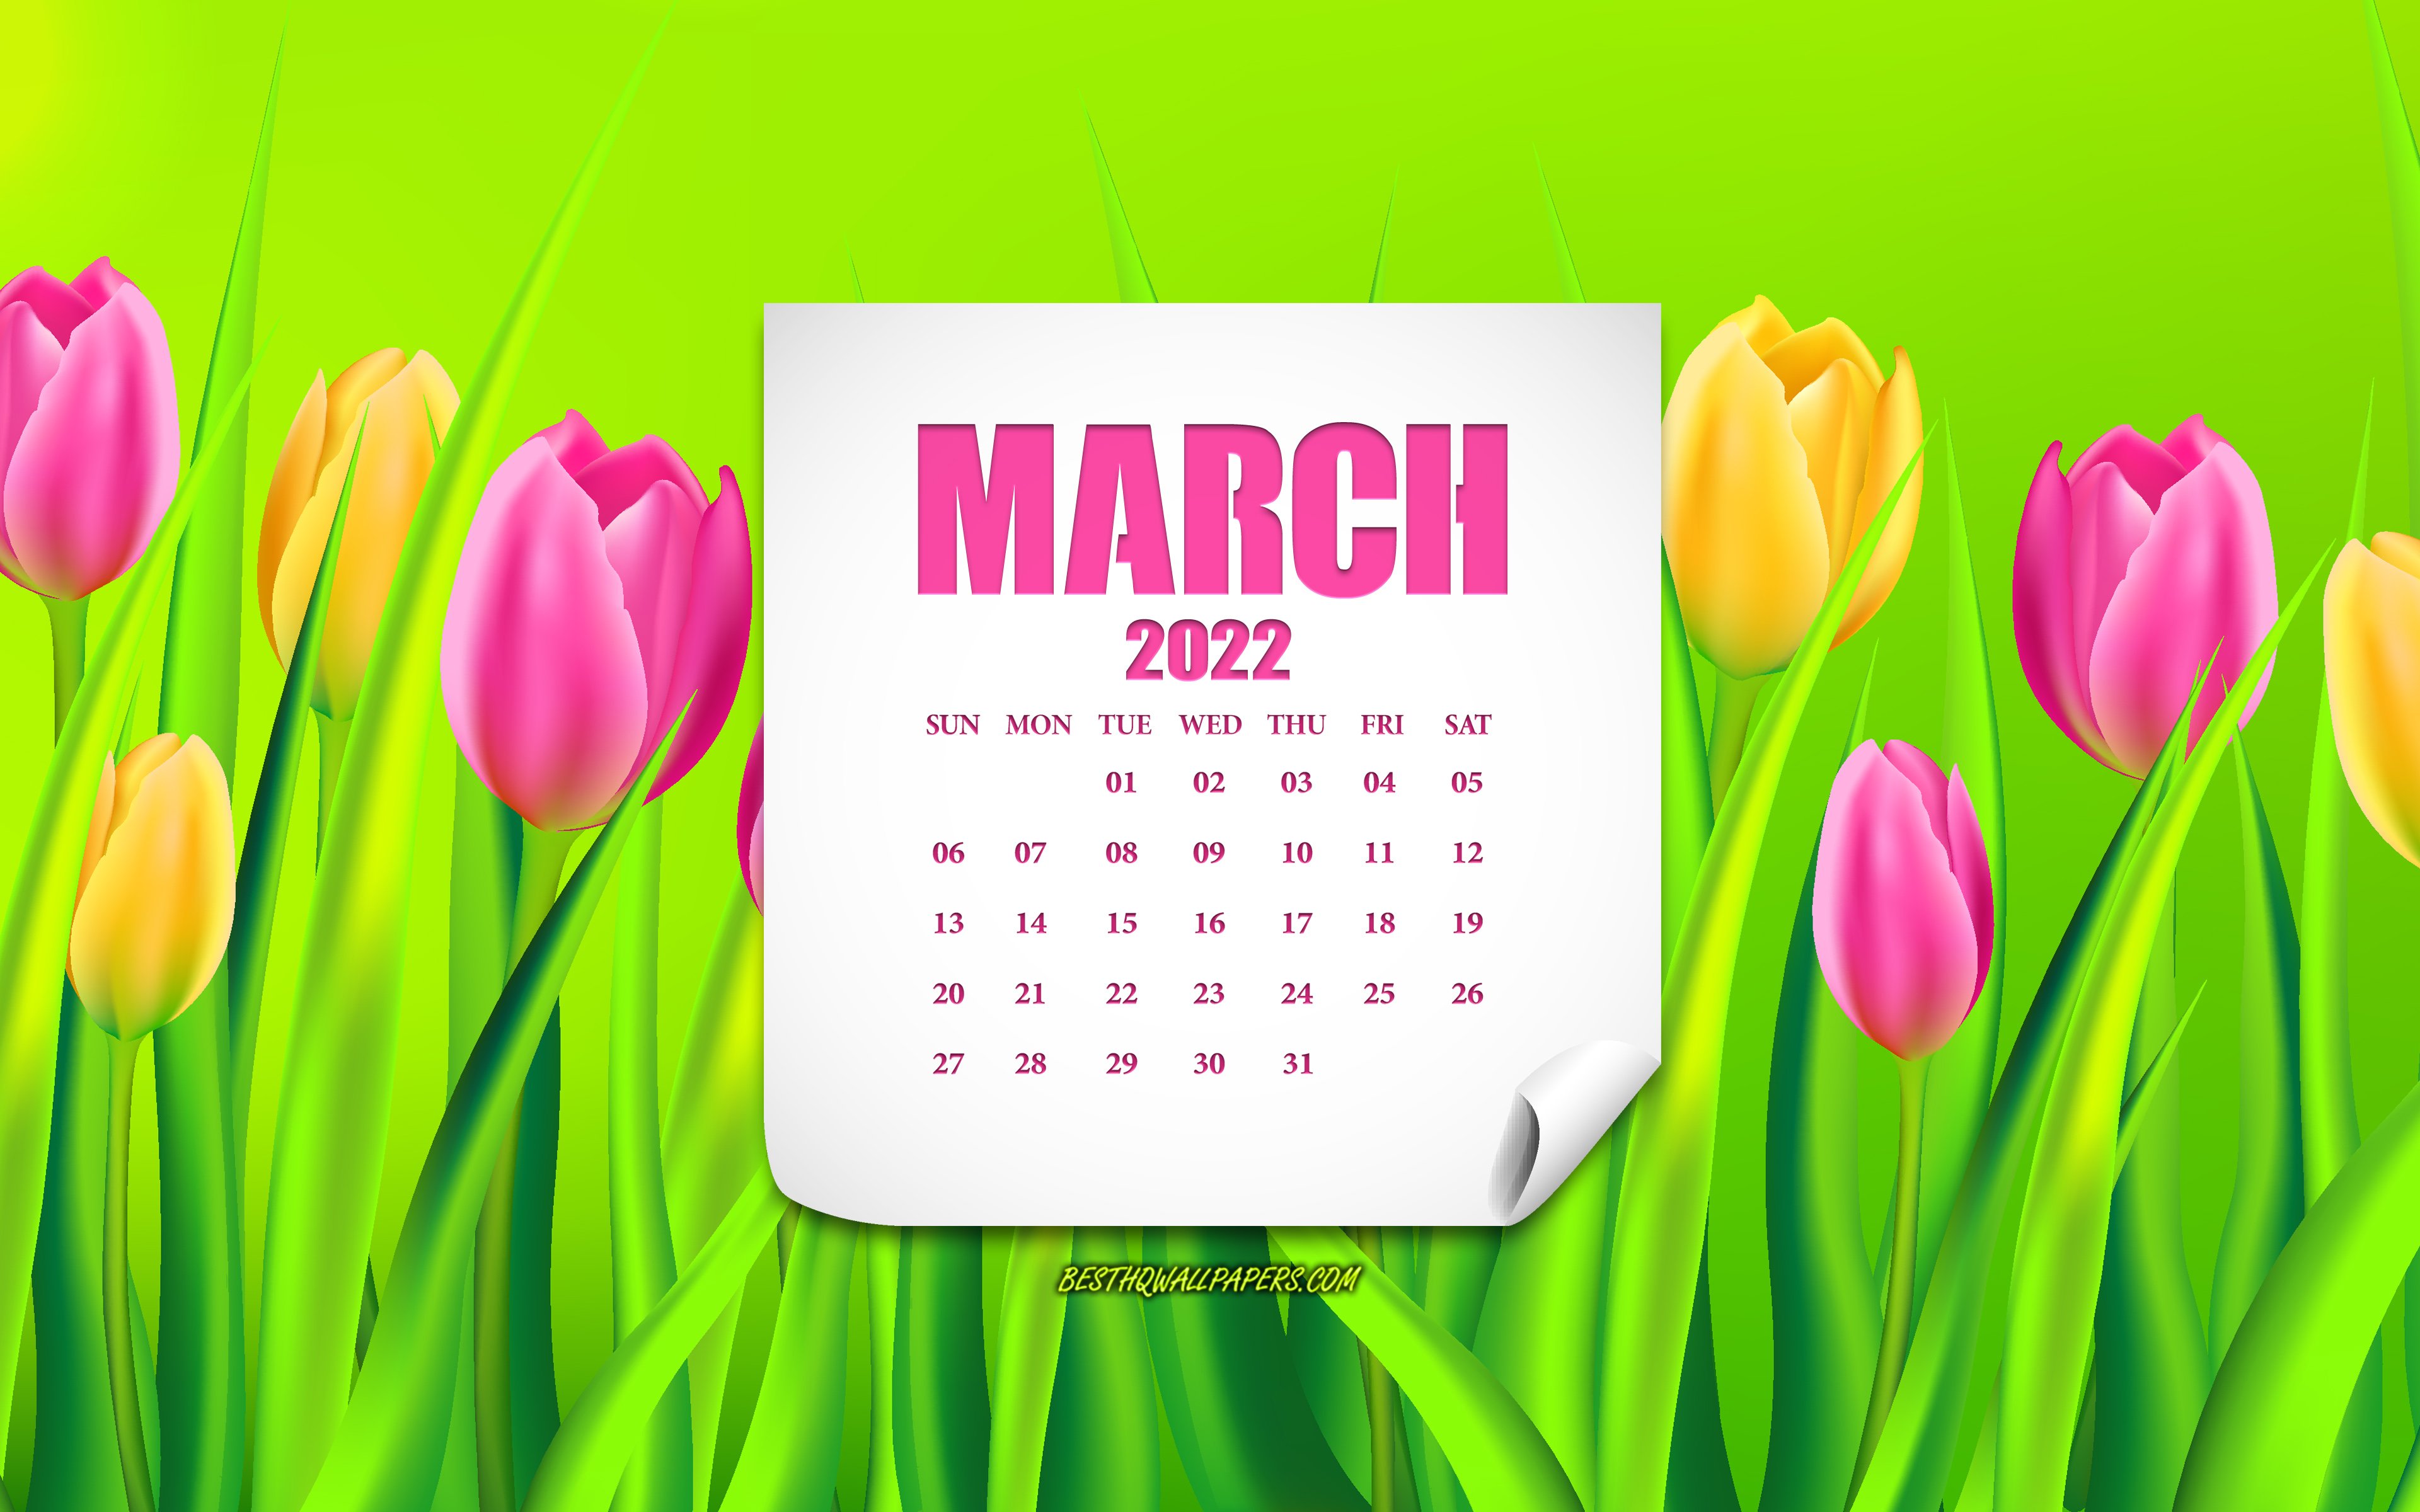 March calendar. Фон для календаря. Апрель фон для календаря. Обои календарь март.